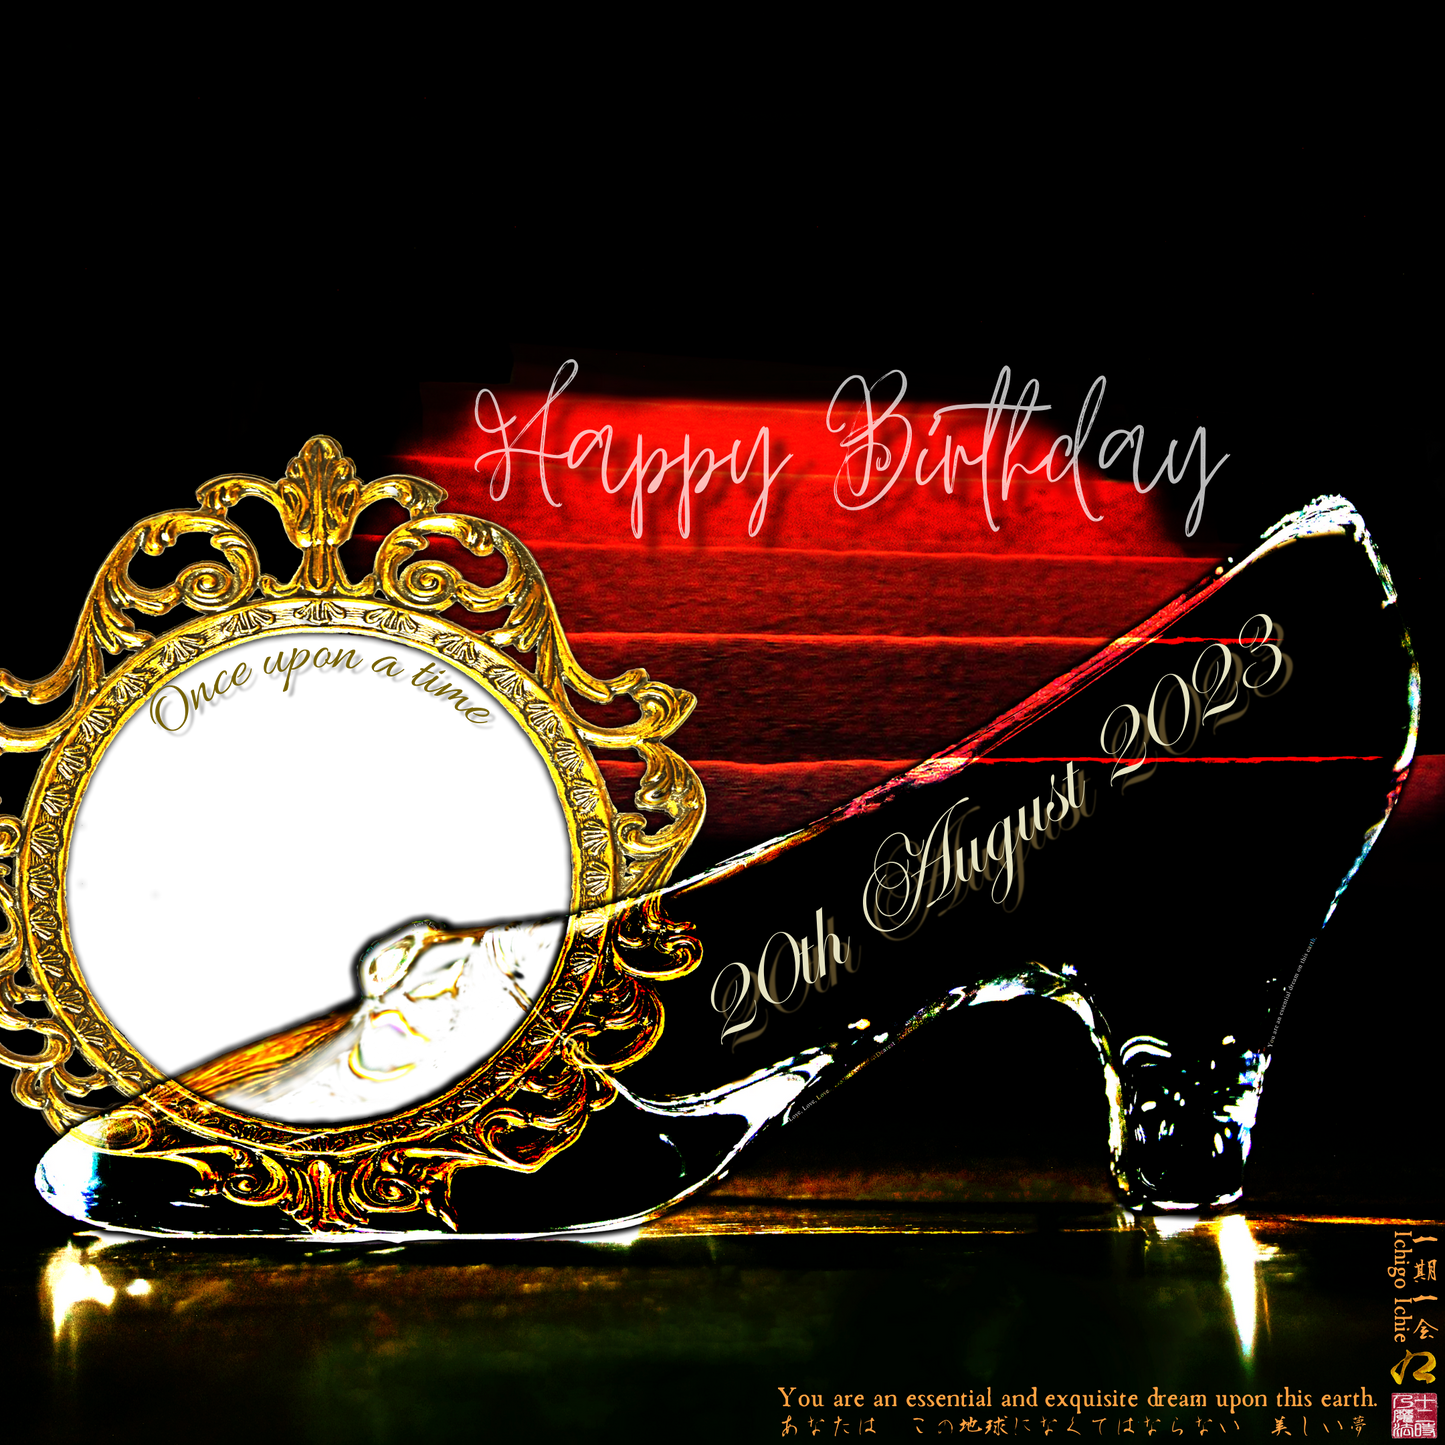 Happy Birthday Glass Slipper "Ichigo Ichie" 20th August 2023 the Left (1-of-1) NFT Art